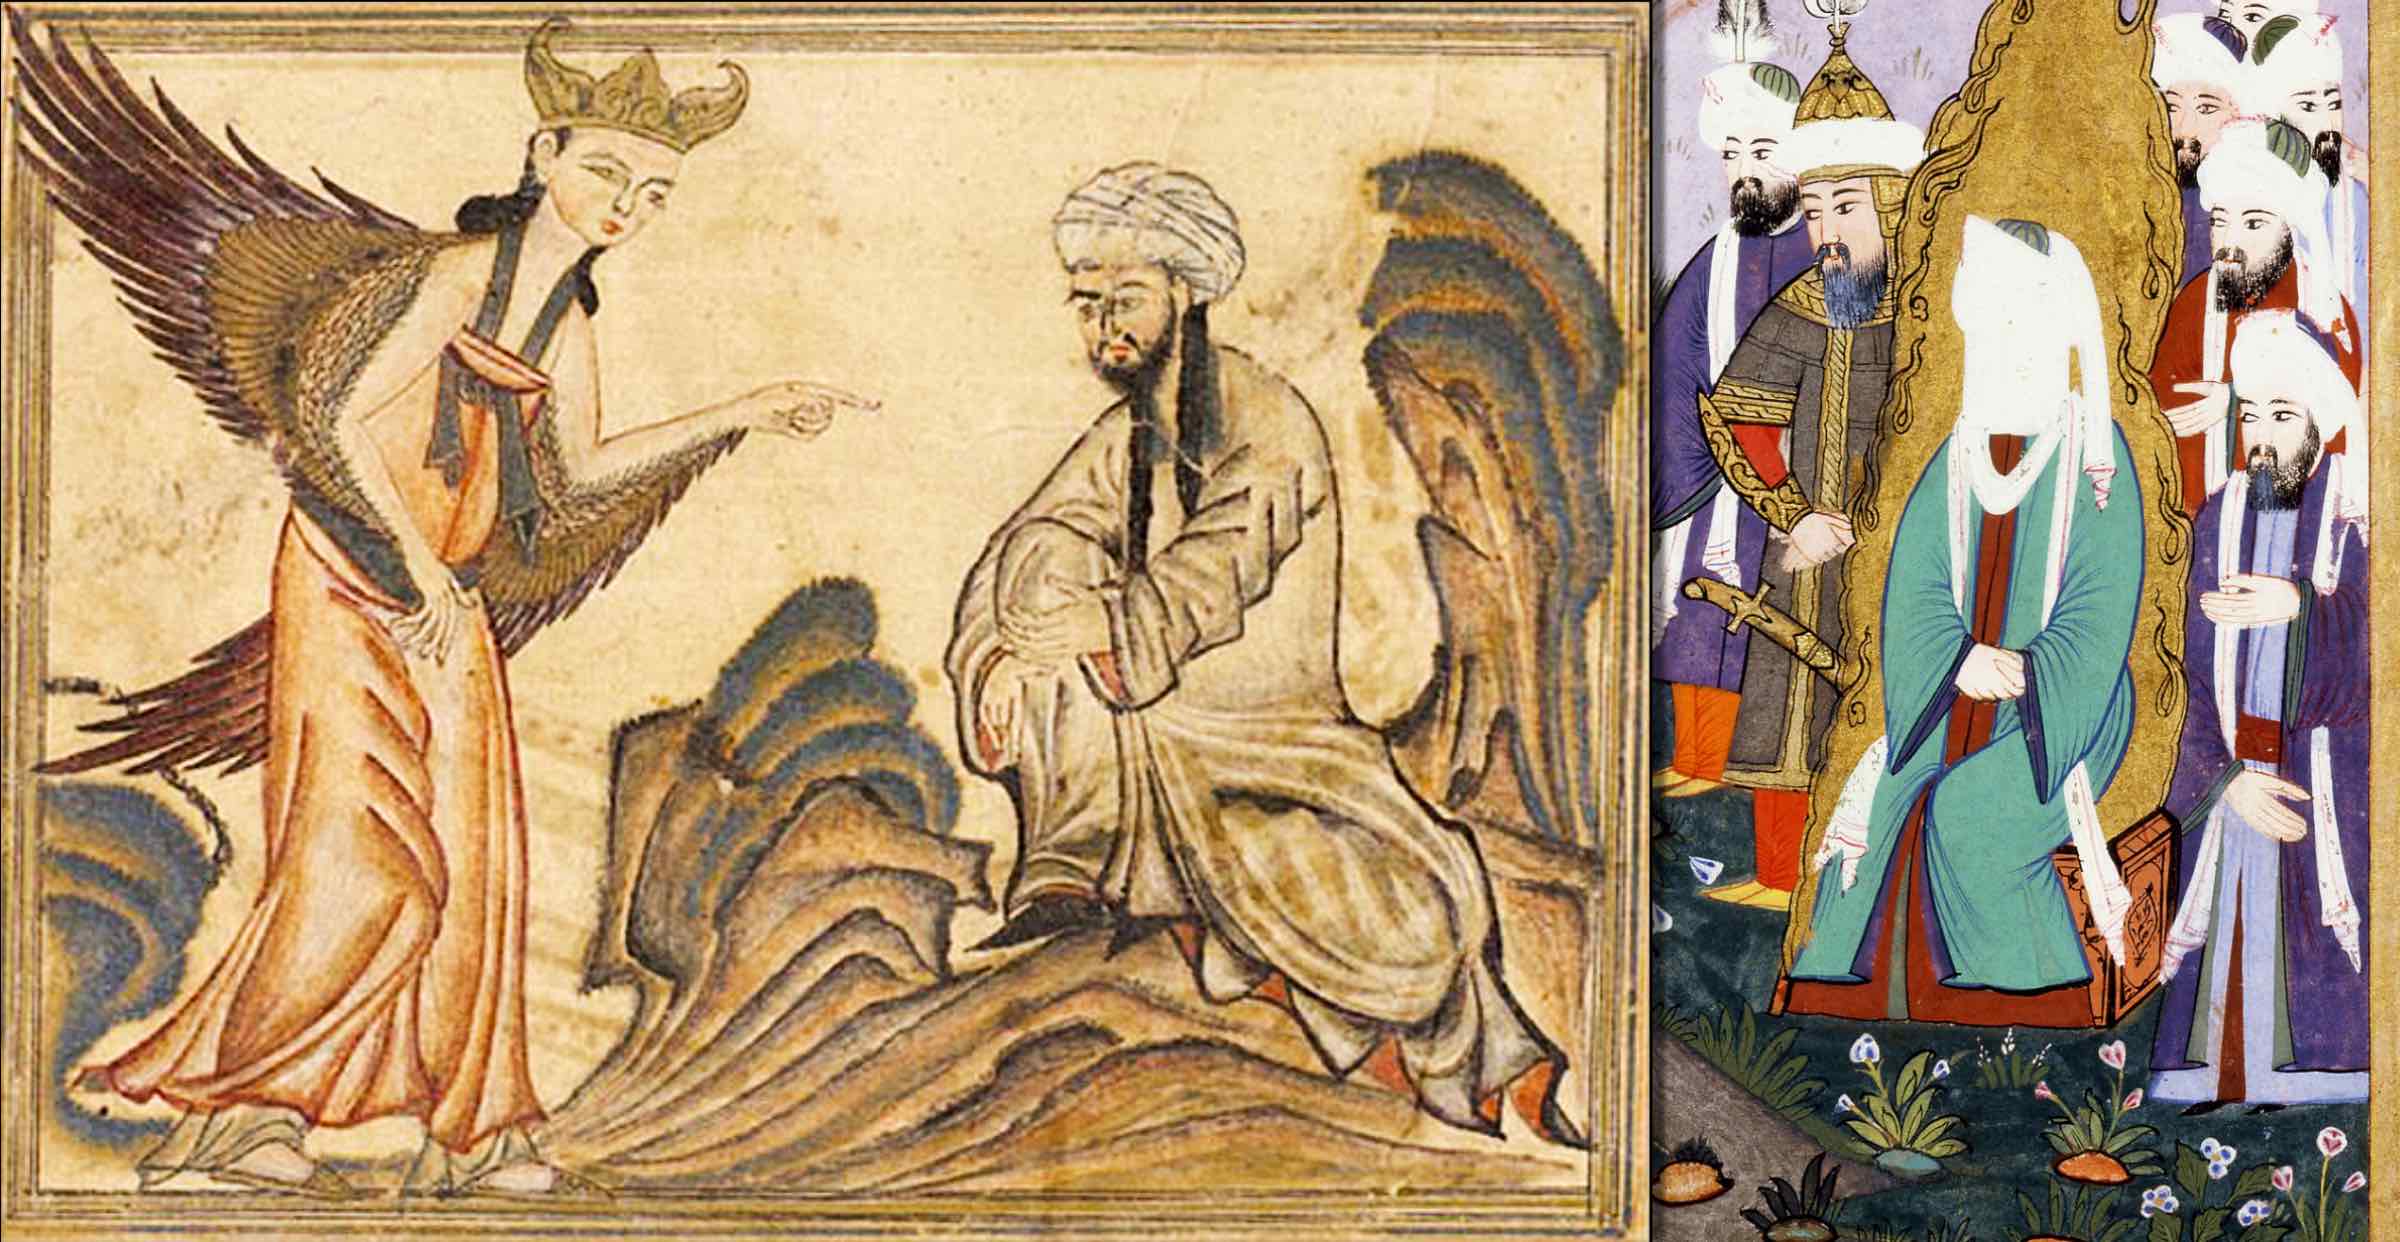 Comparandum: Illustration by Rashid al-Din Hamadani, Tabriz, Persia, 1307; Fragment of Ali beheading Nadr ibn al-Harith in the presence of Muhammad and his companions. From the Siyer-i Nebi. Image source: Wikipedia